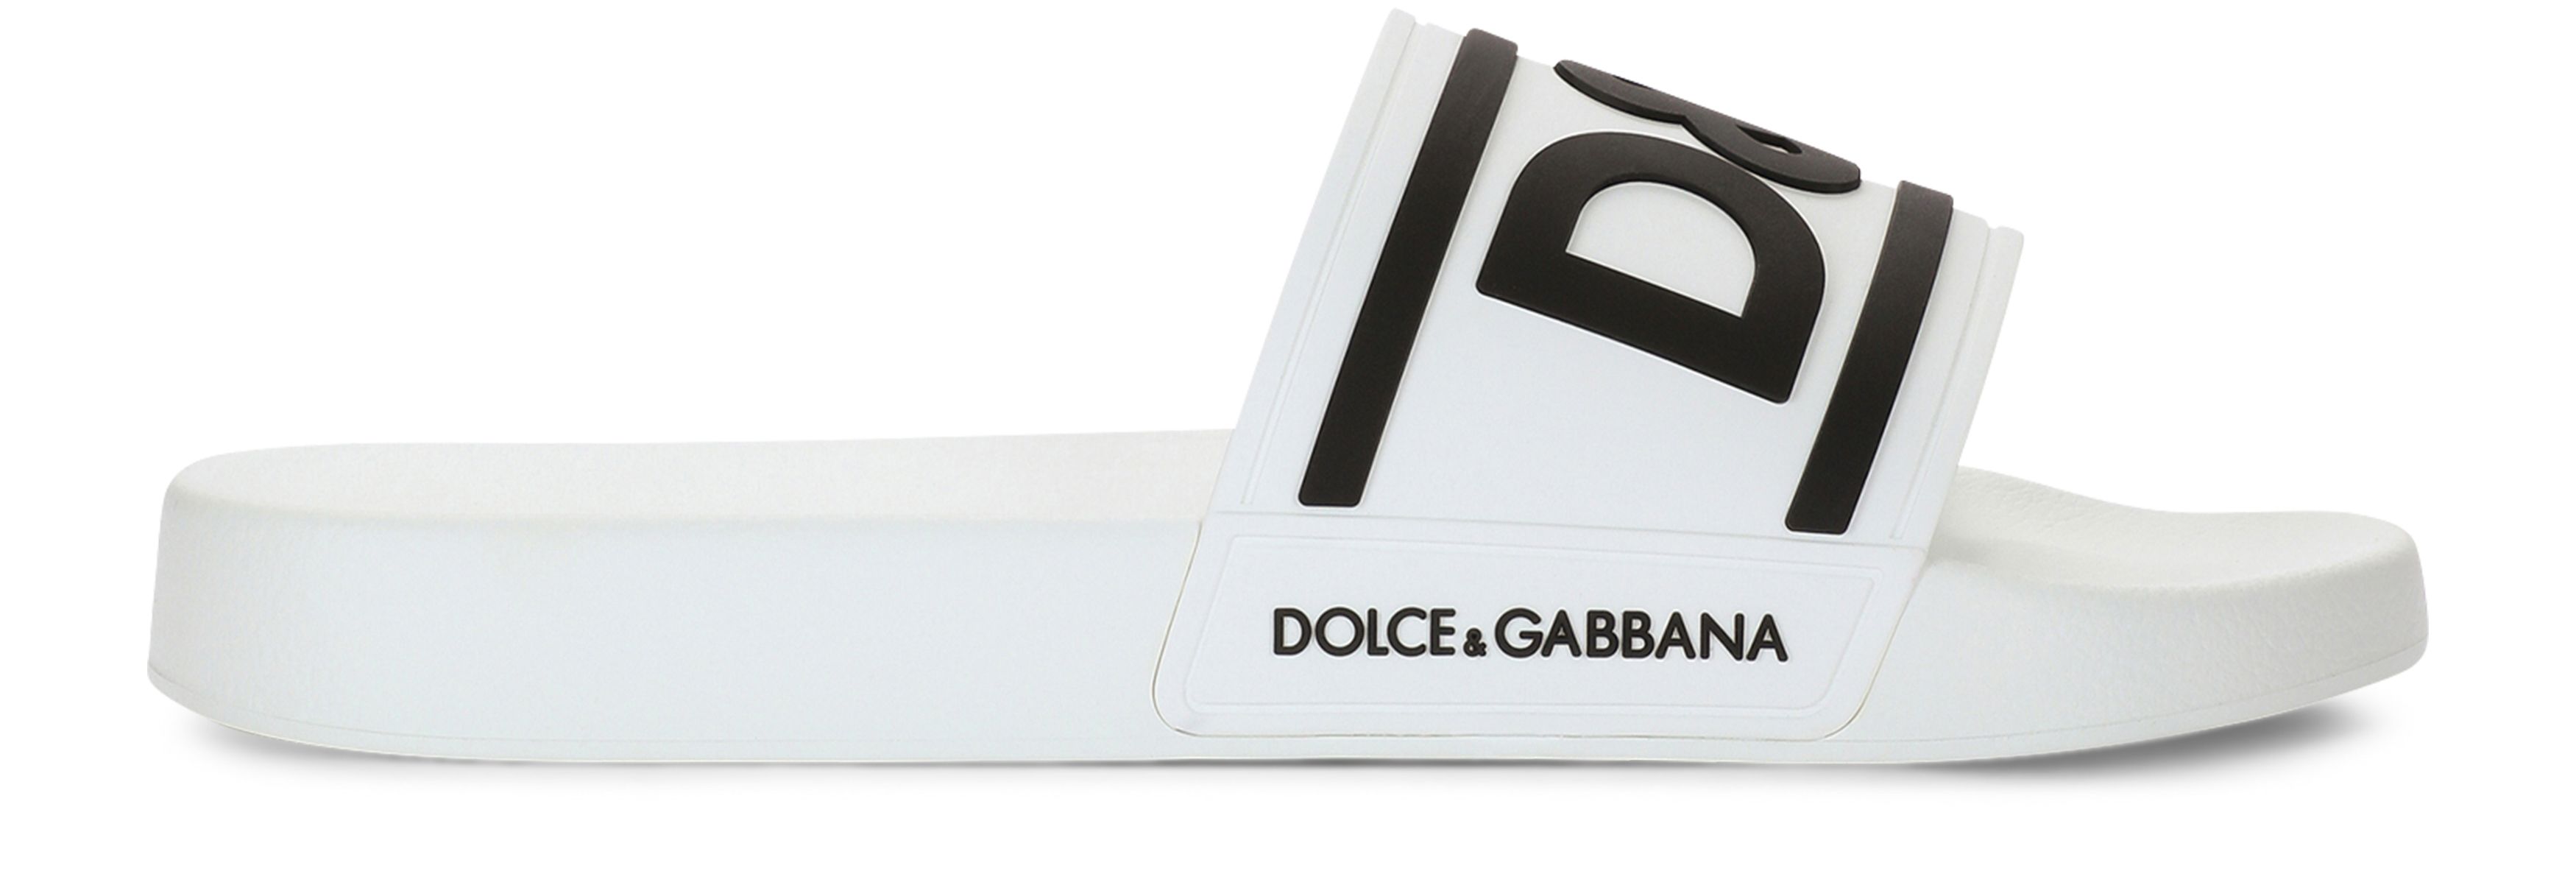 Dolce & Gabbana Rubber beachwear sliders with DG logo